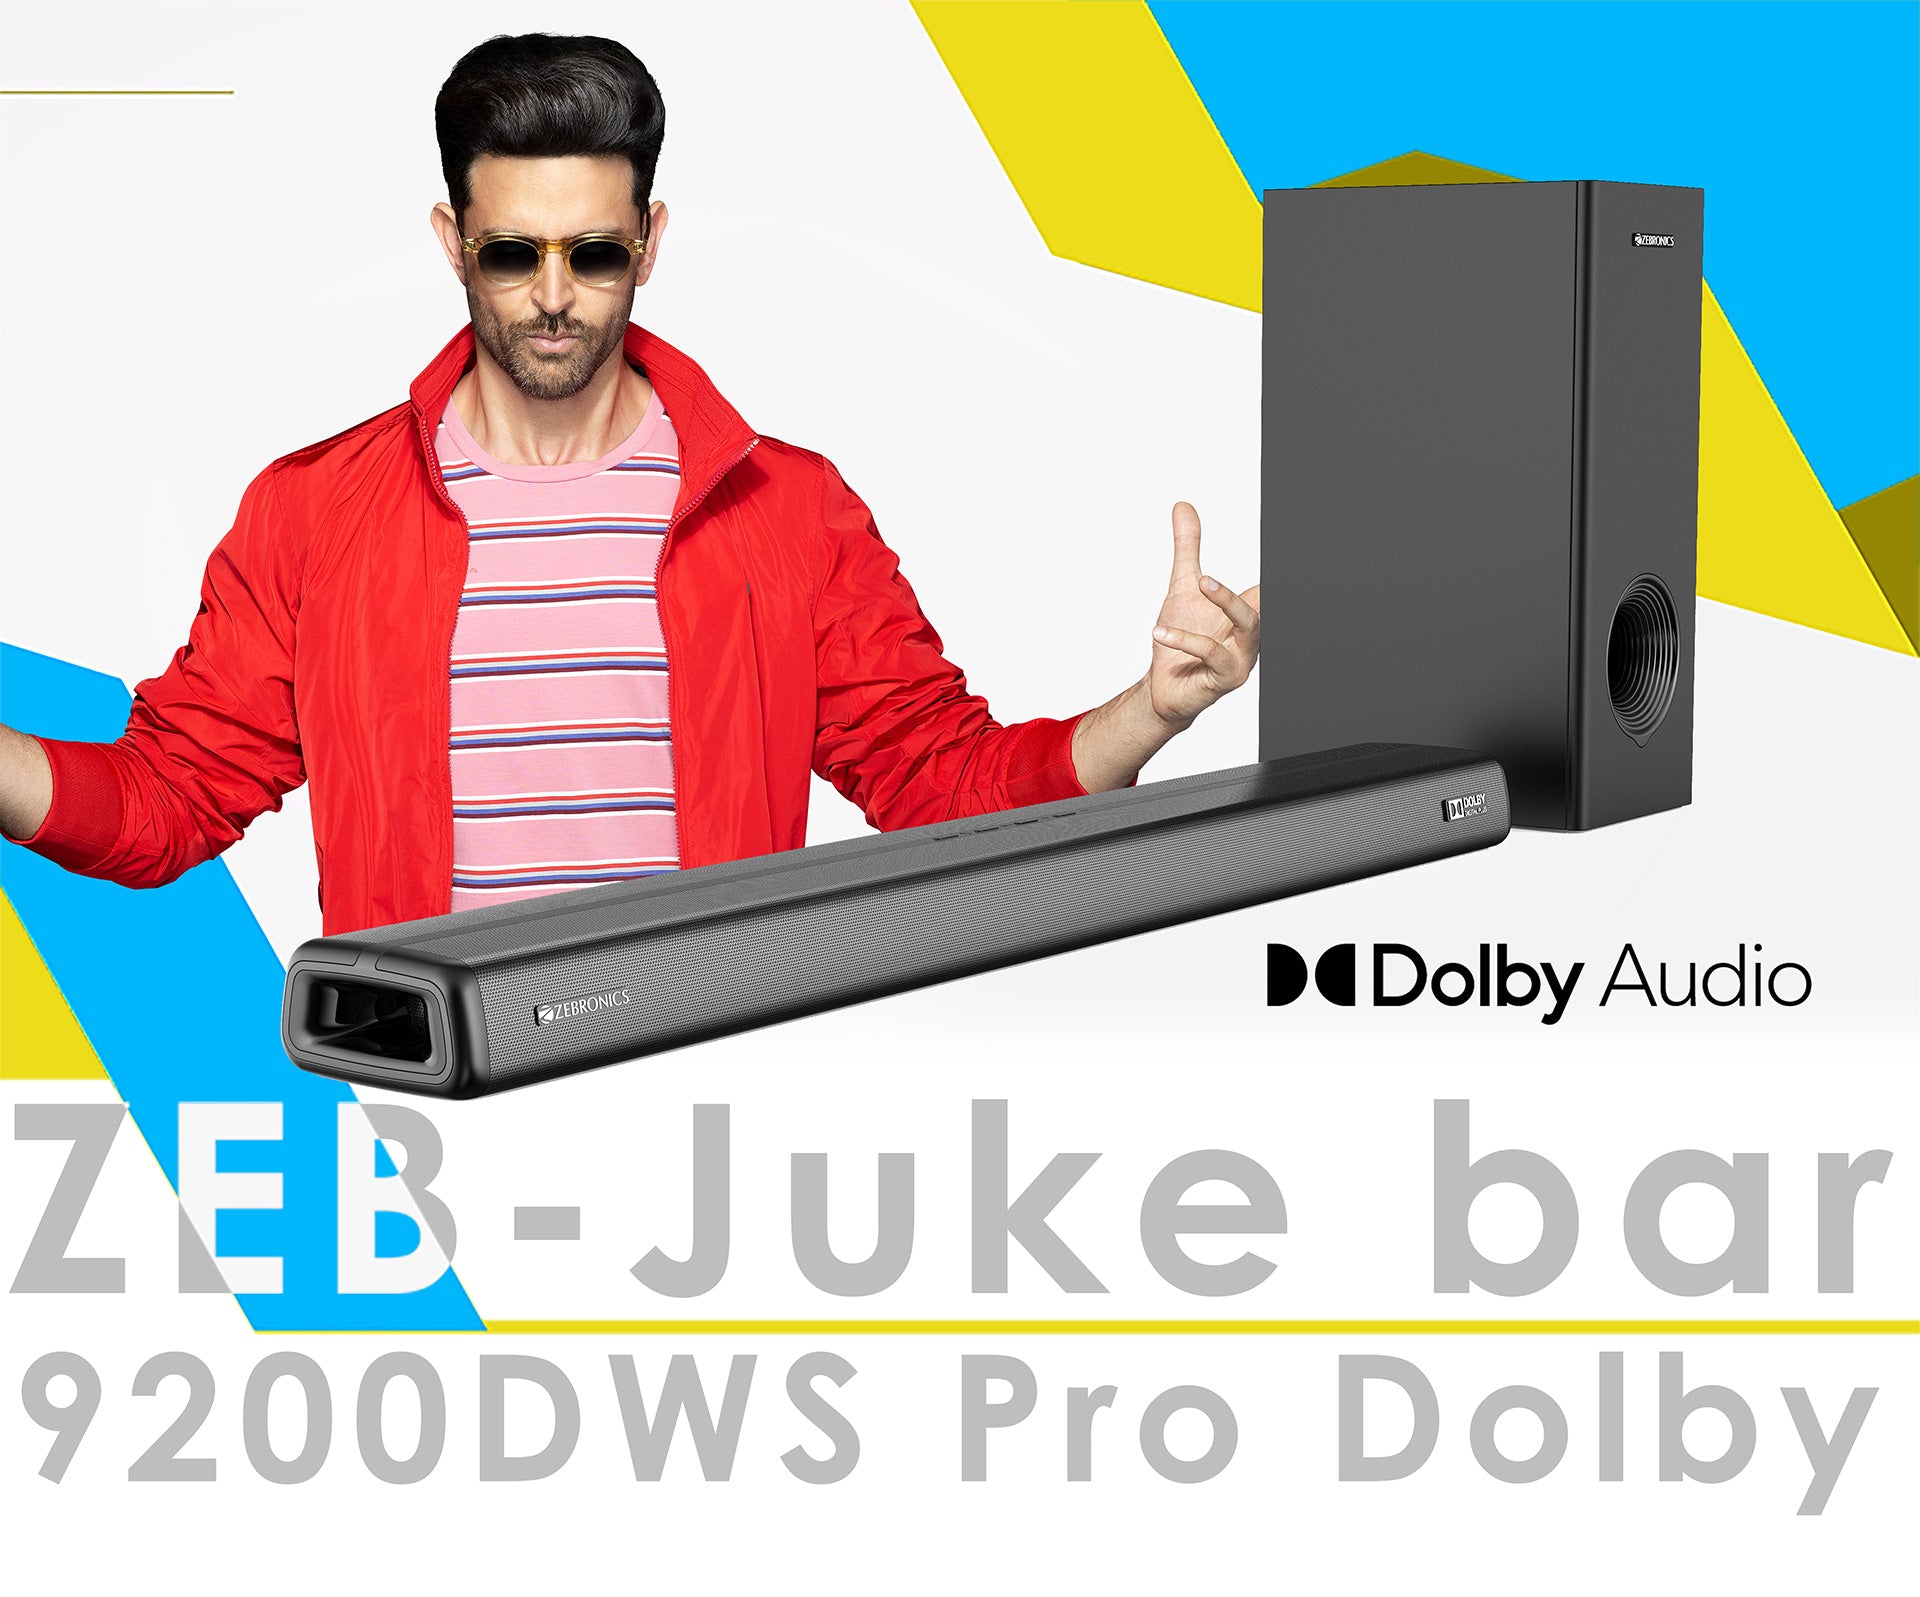 9200DWS Pro Dolby-1